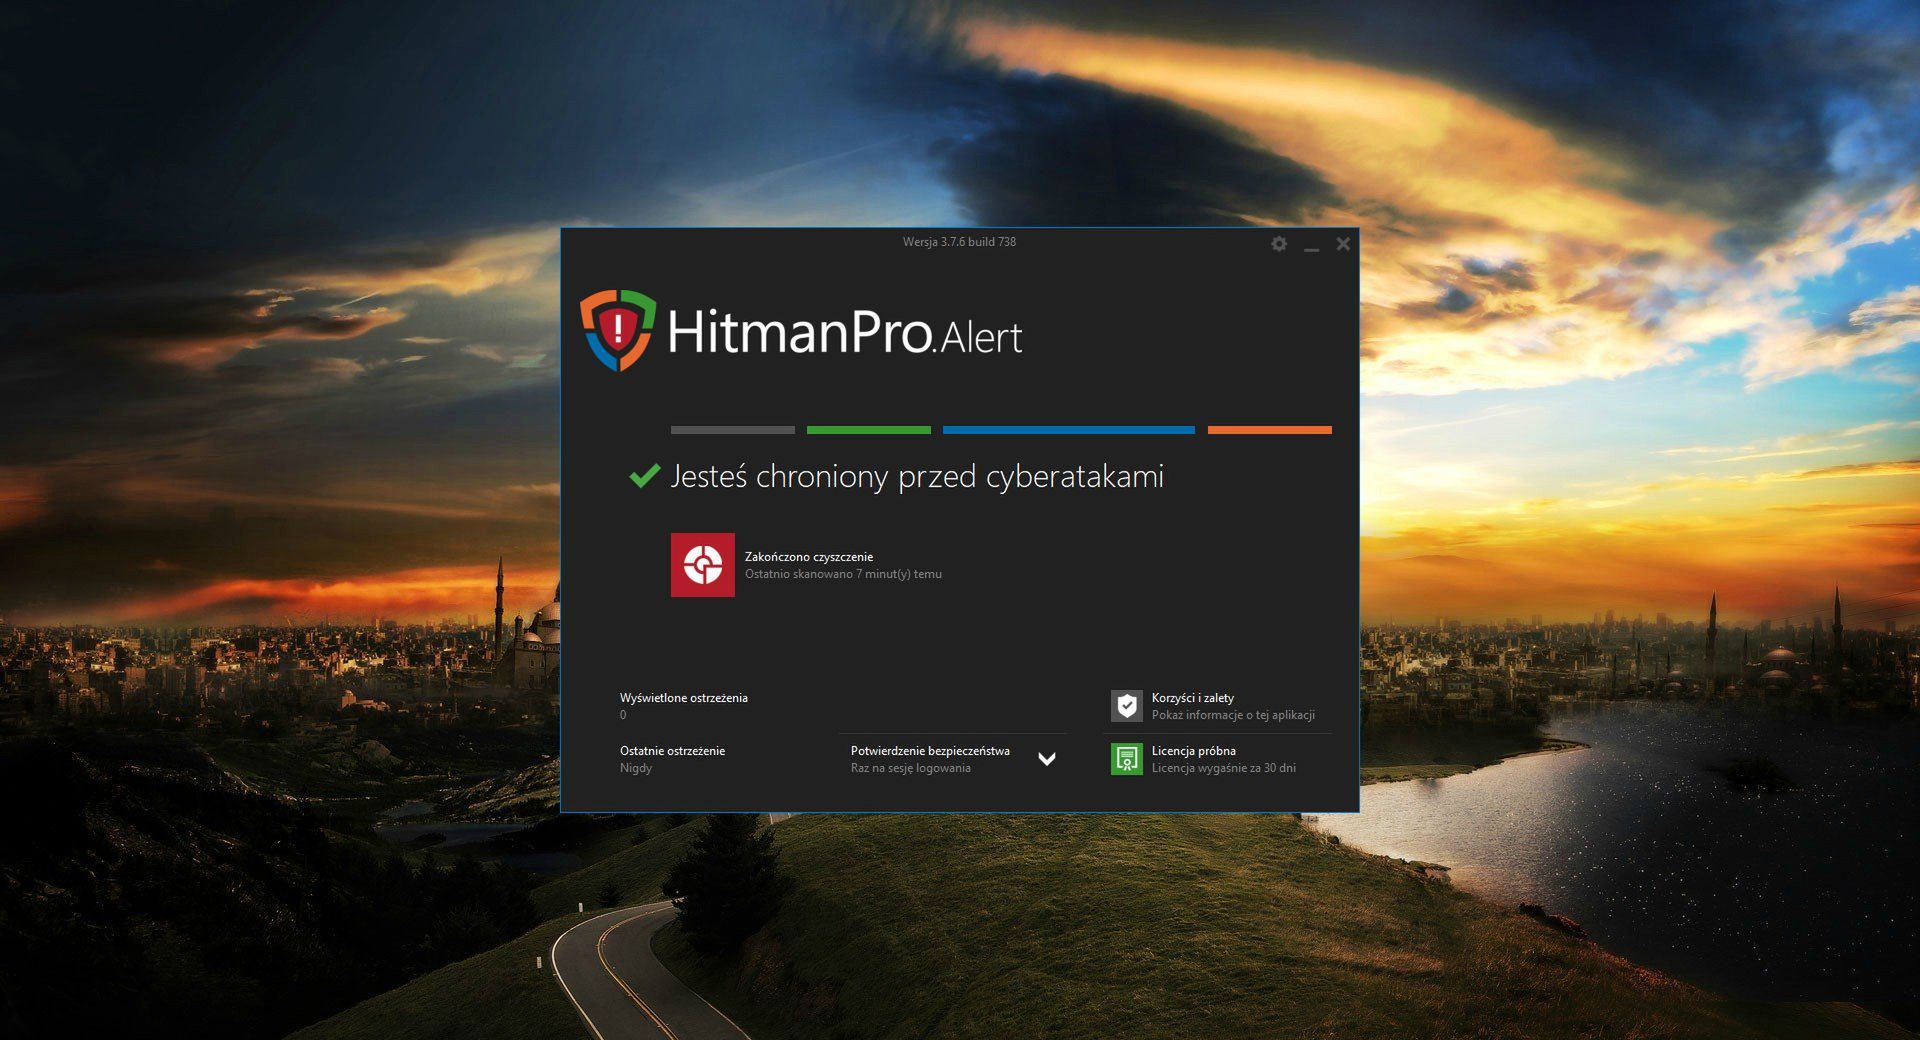 download the new version HitmanPro.Alert 3.8.25.971